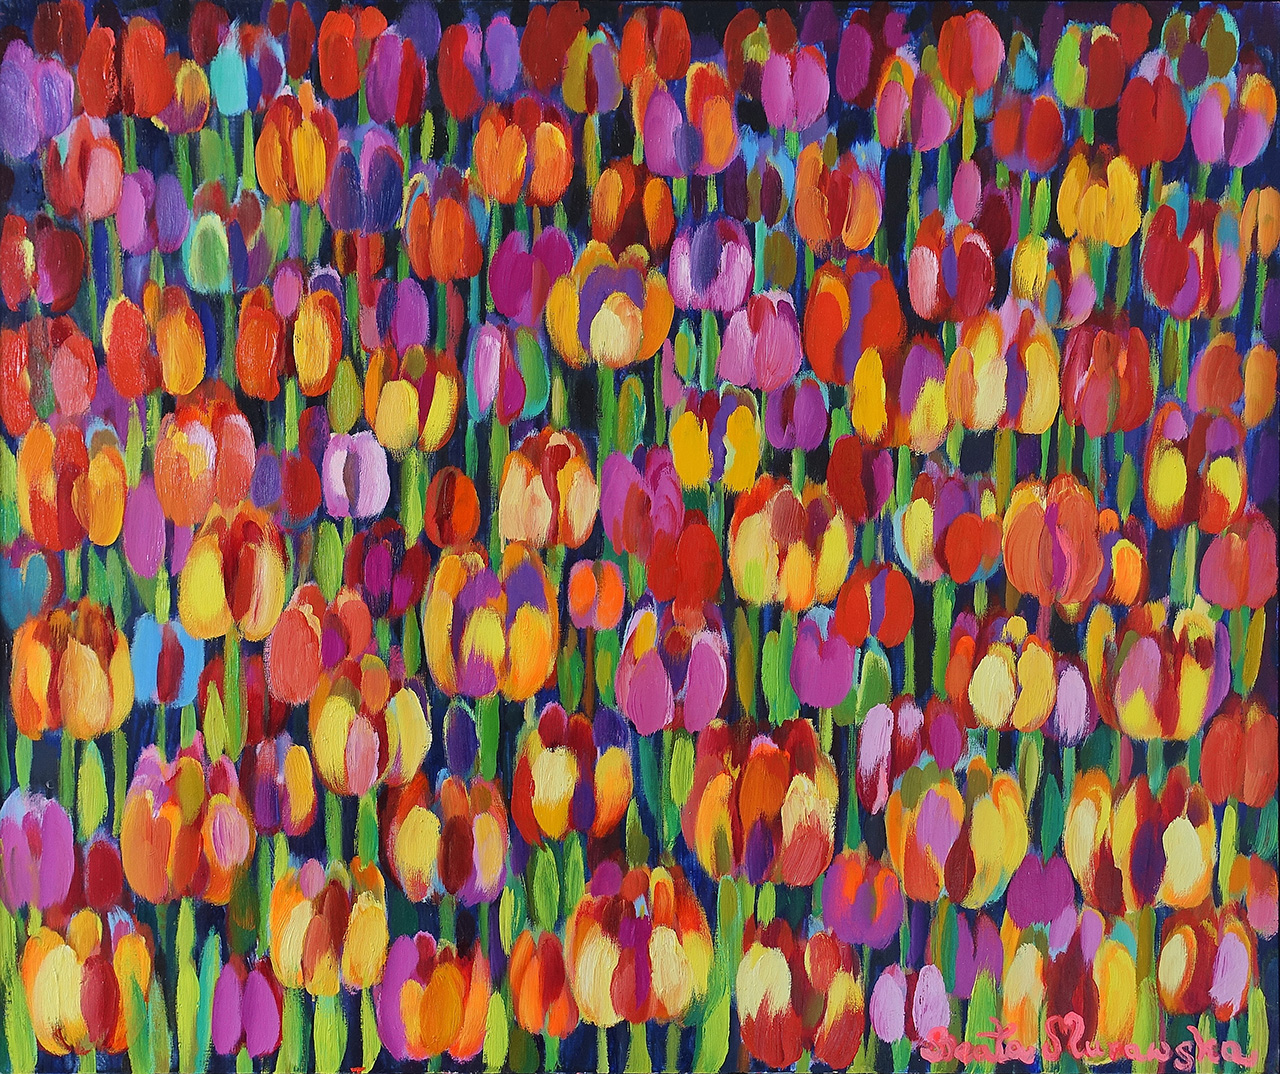 Beata Murawska - Notte dei tulipani (Oil on Canvas | Size: 126 x 106 cm | Price: 16000 PLN)